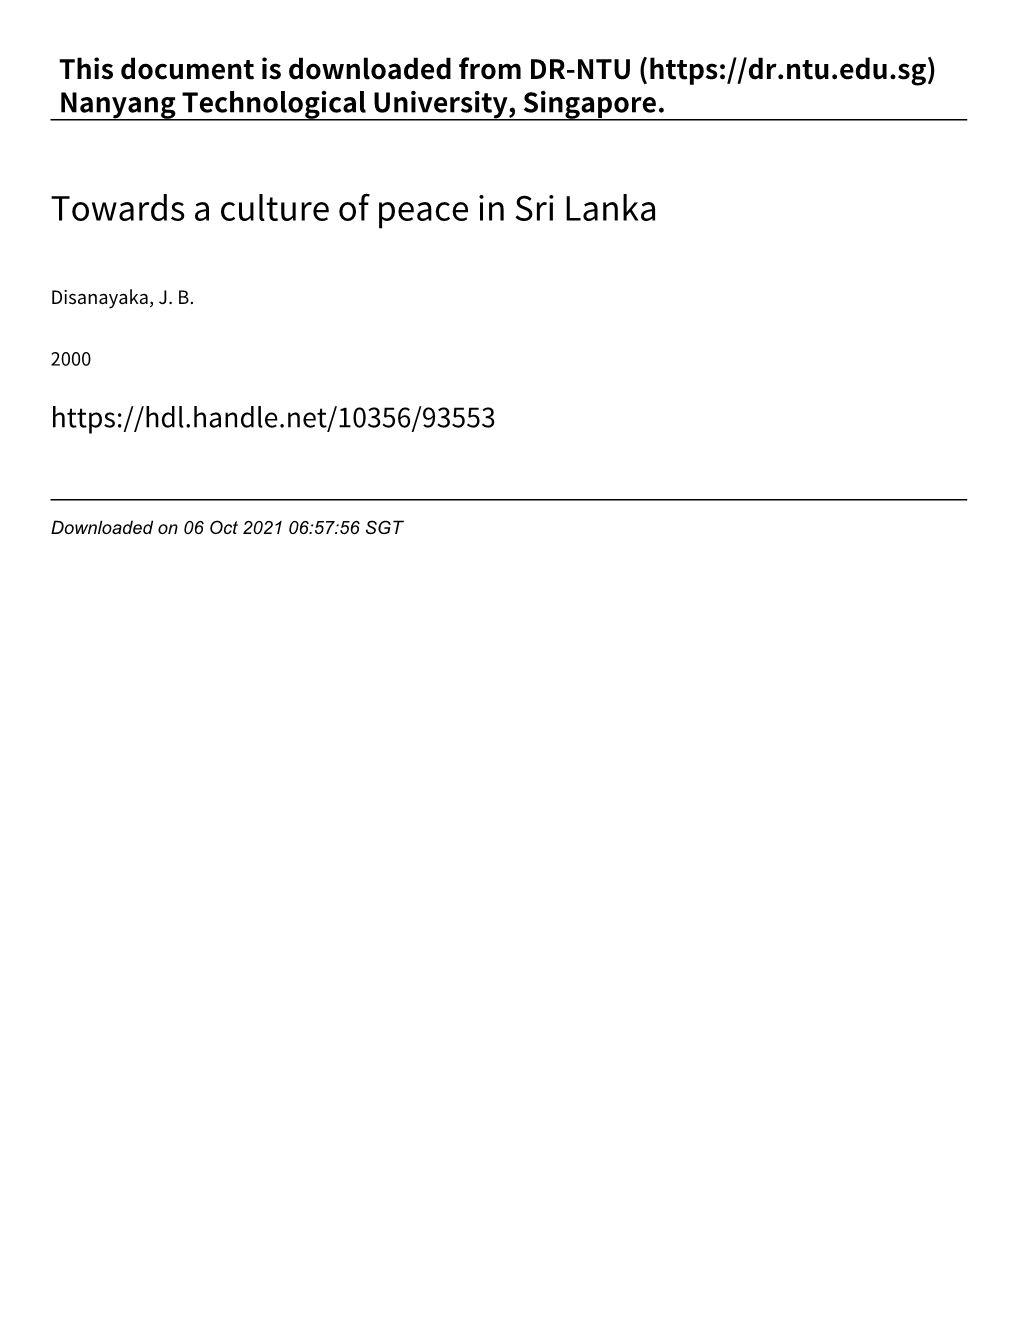 Towards a Culture of Peace in Sri Lanka